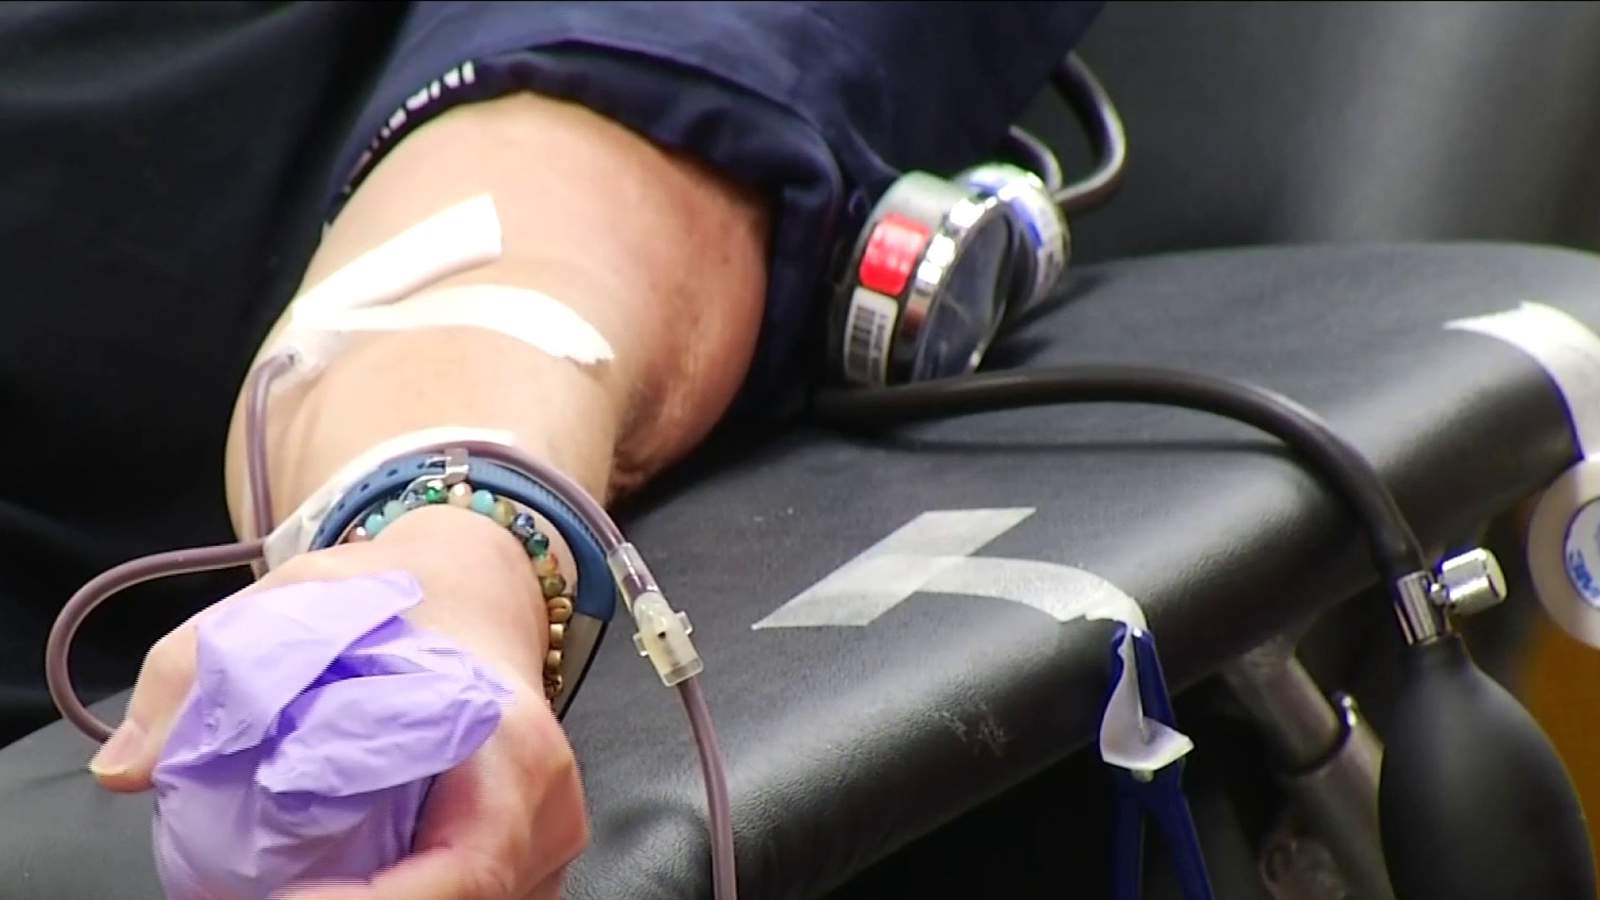 UHS urges blood donations under loosened FDA guidelines